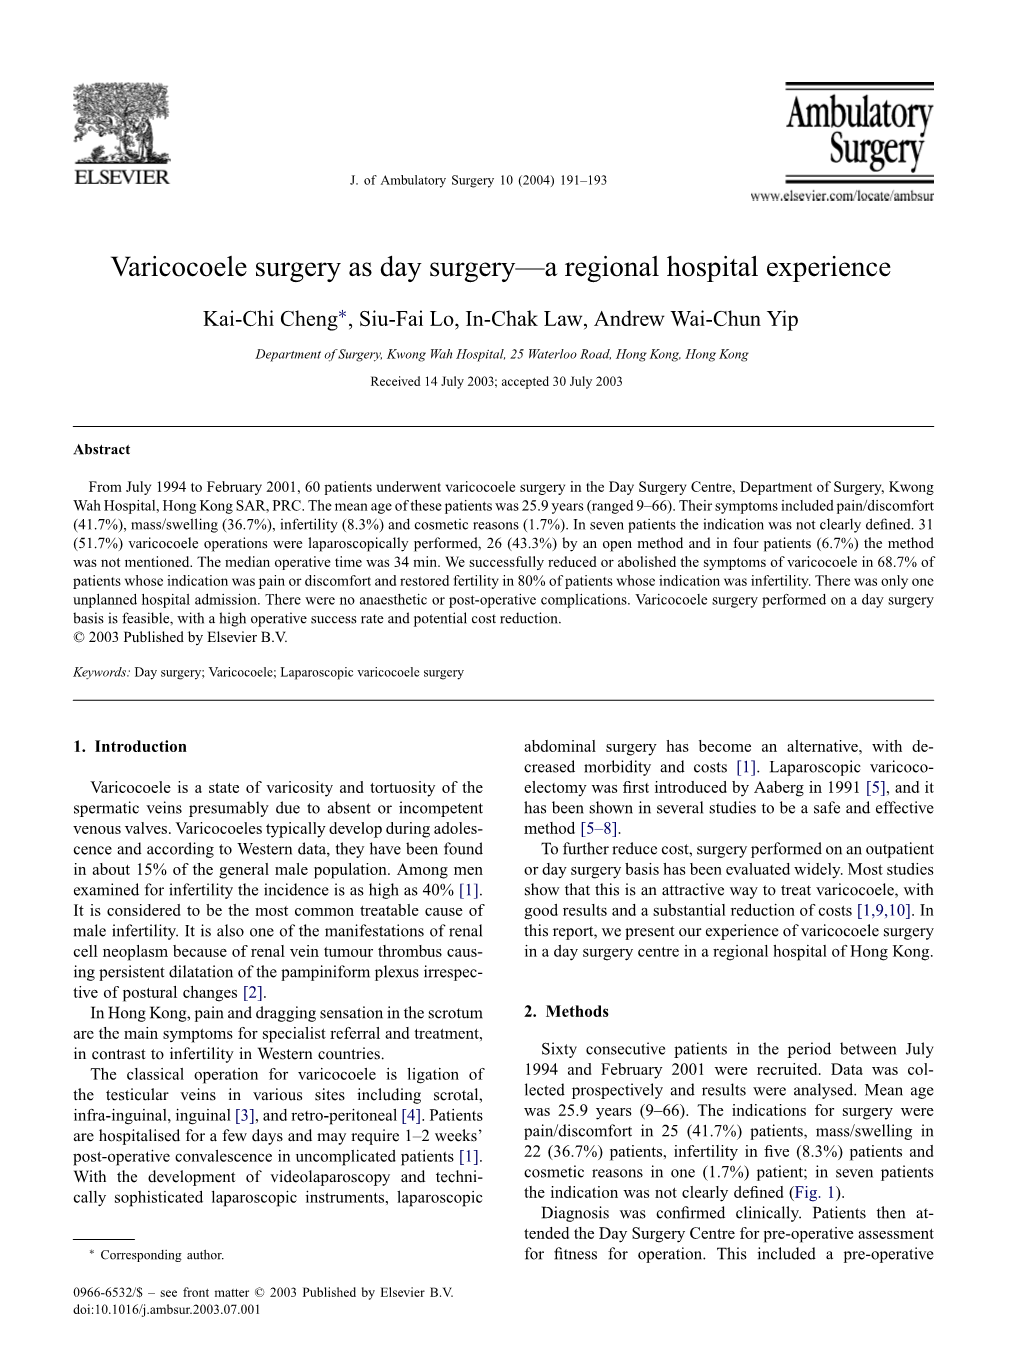 Varicocoele Surgery As Day Surgery—A Regional Hospital Experience